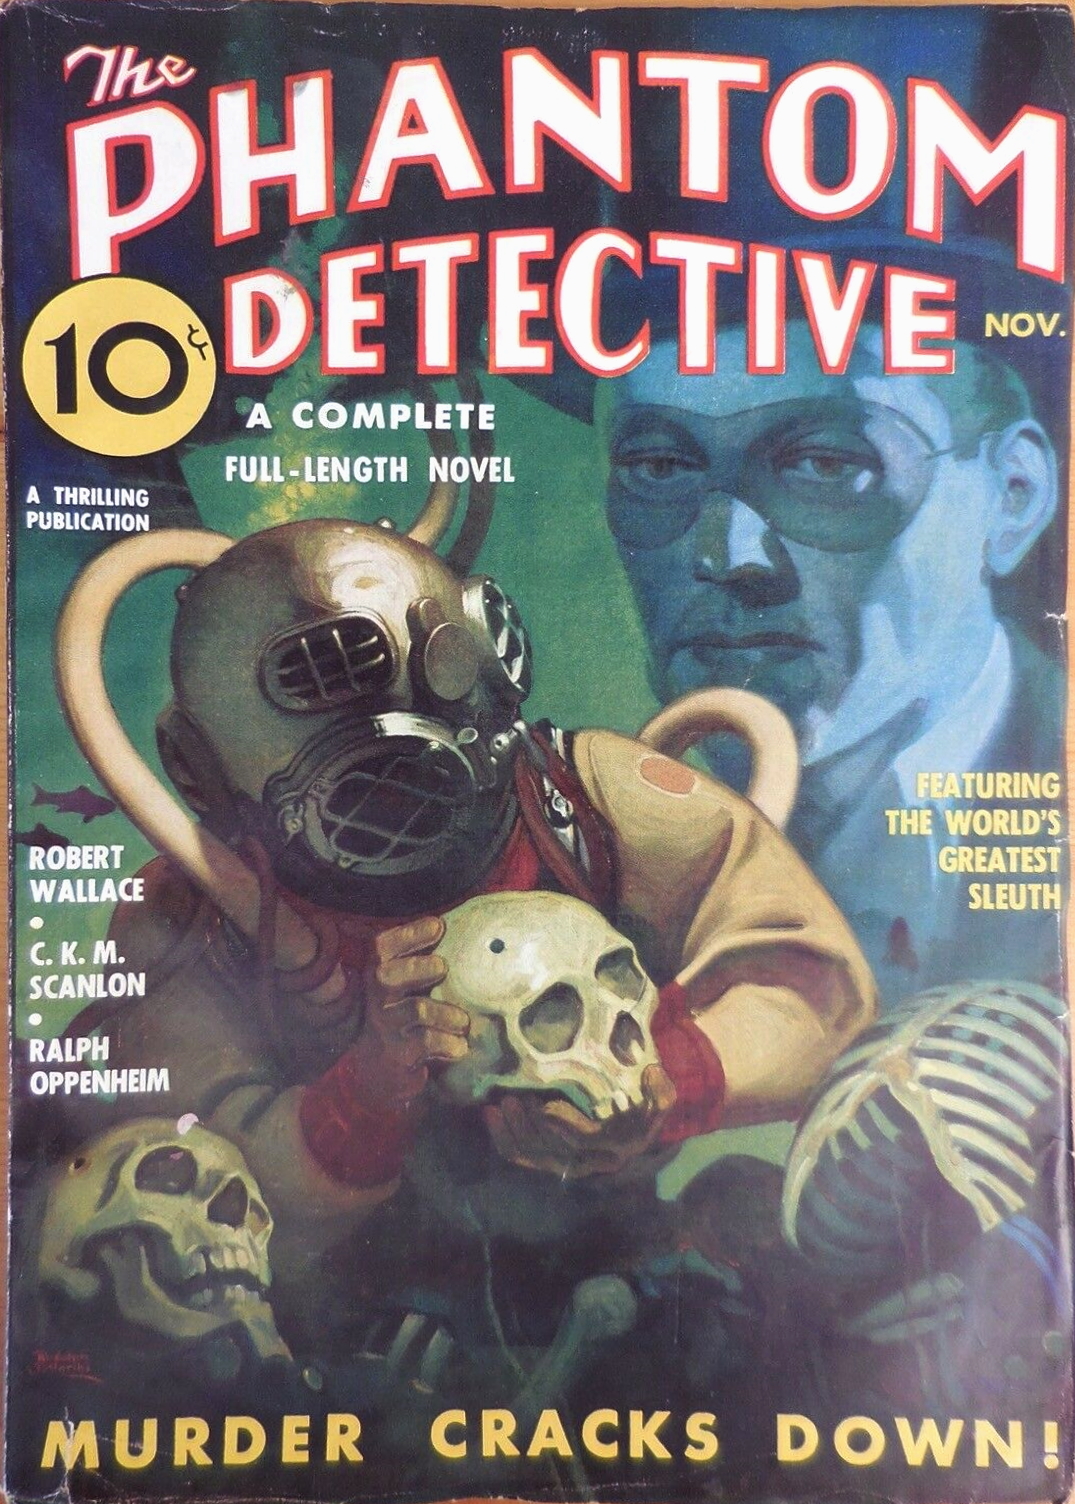 The Phantom Detective - November 1935